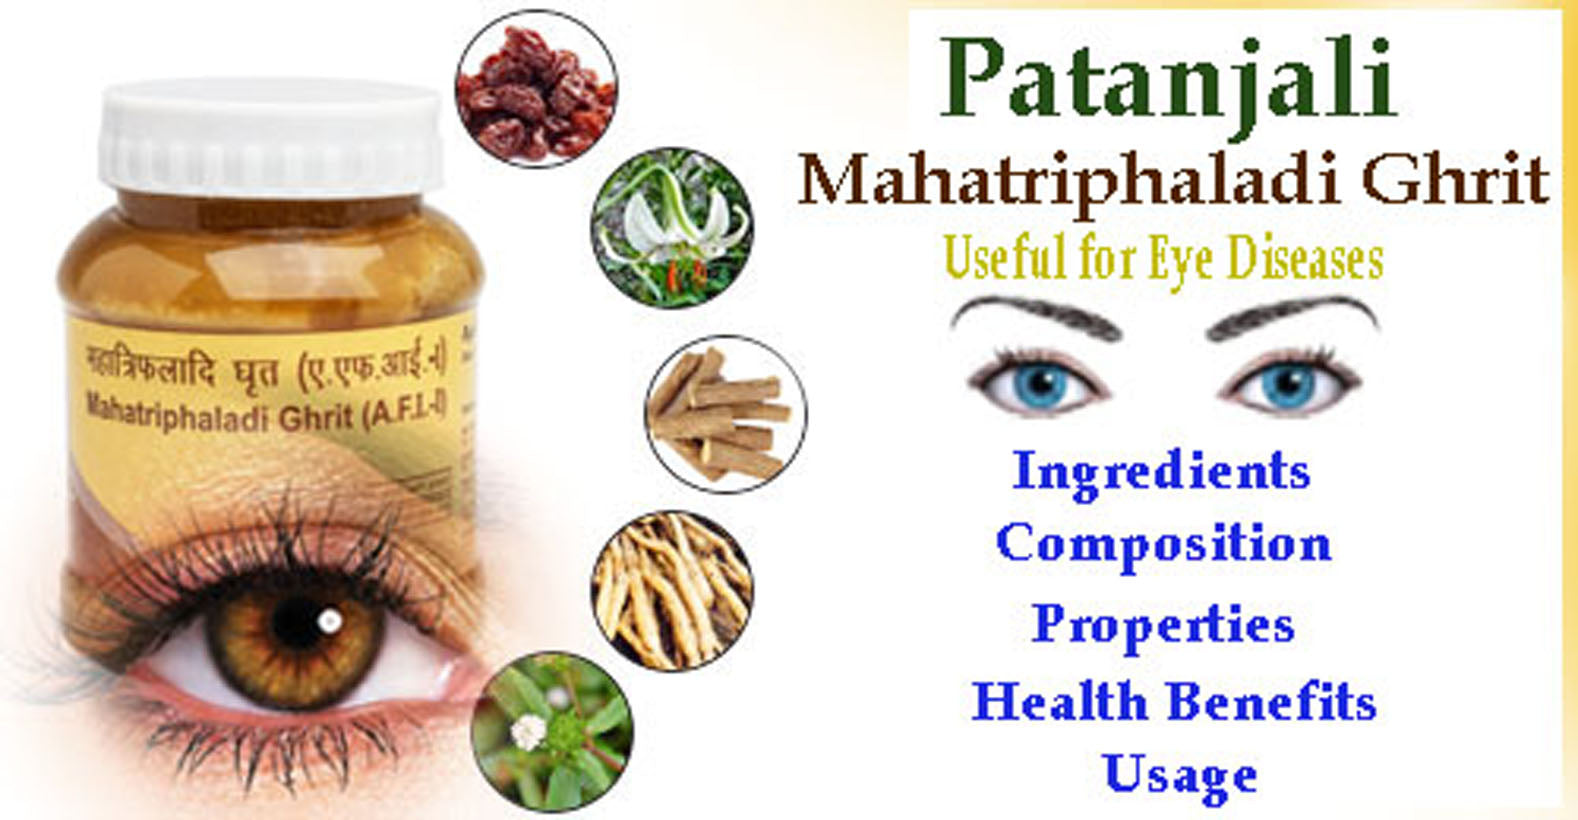 Patanjali Mahatriphaladi Ghrit - Ingredients, Composition, Properties, Health Benefits, Usage